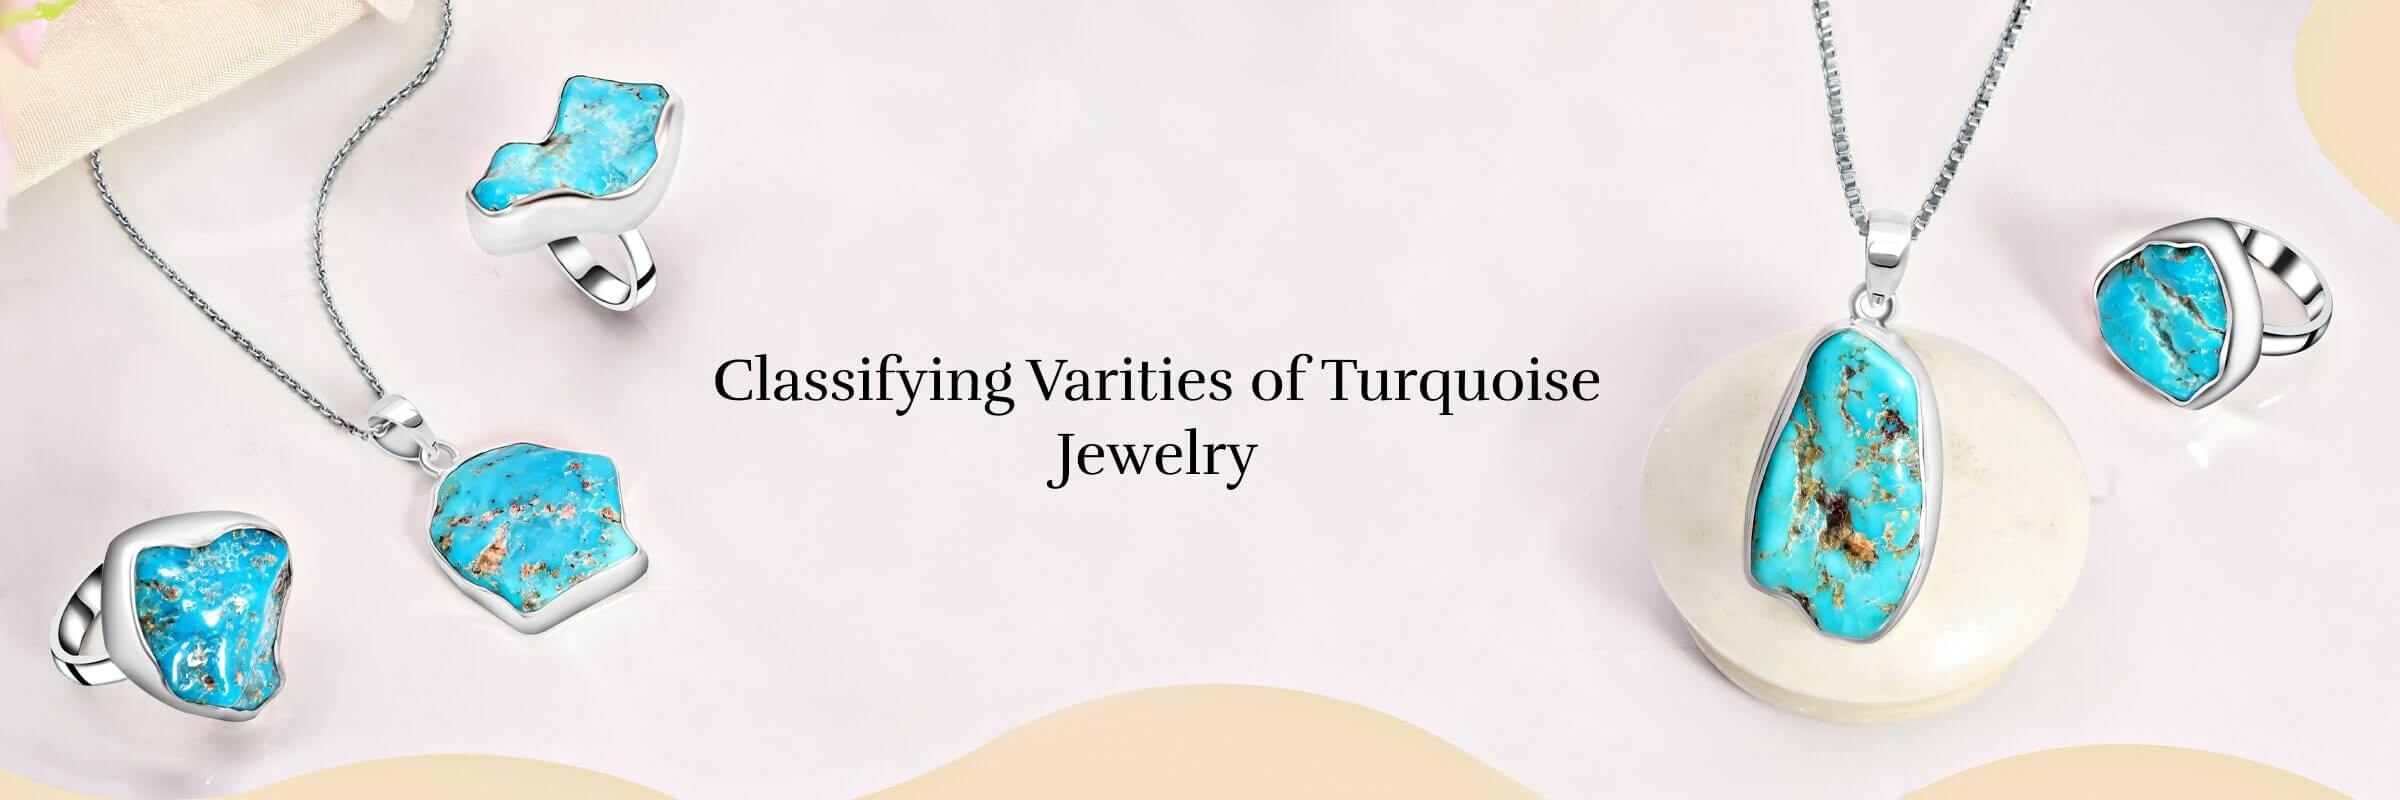 Types of Turquoise stone